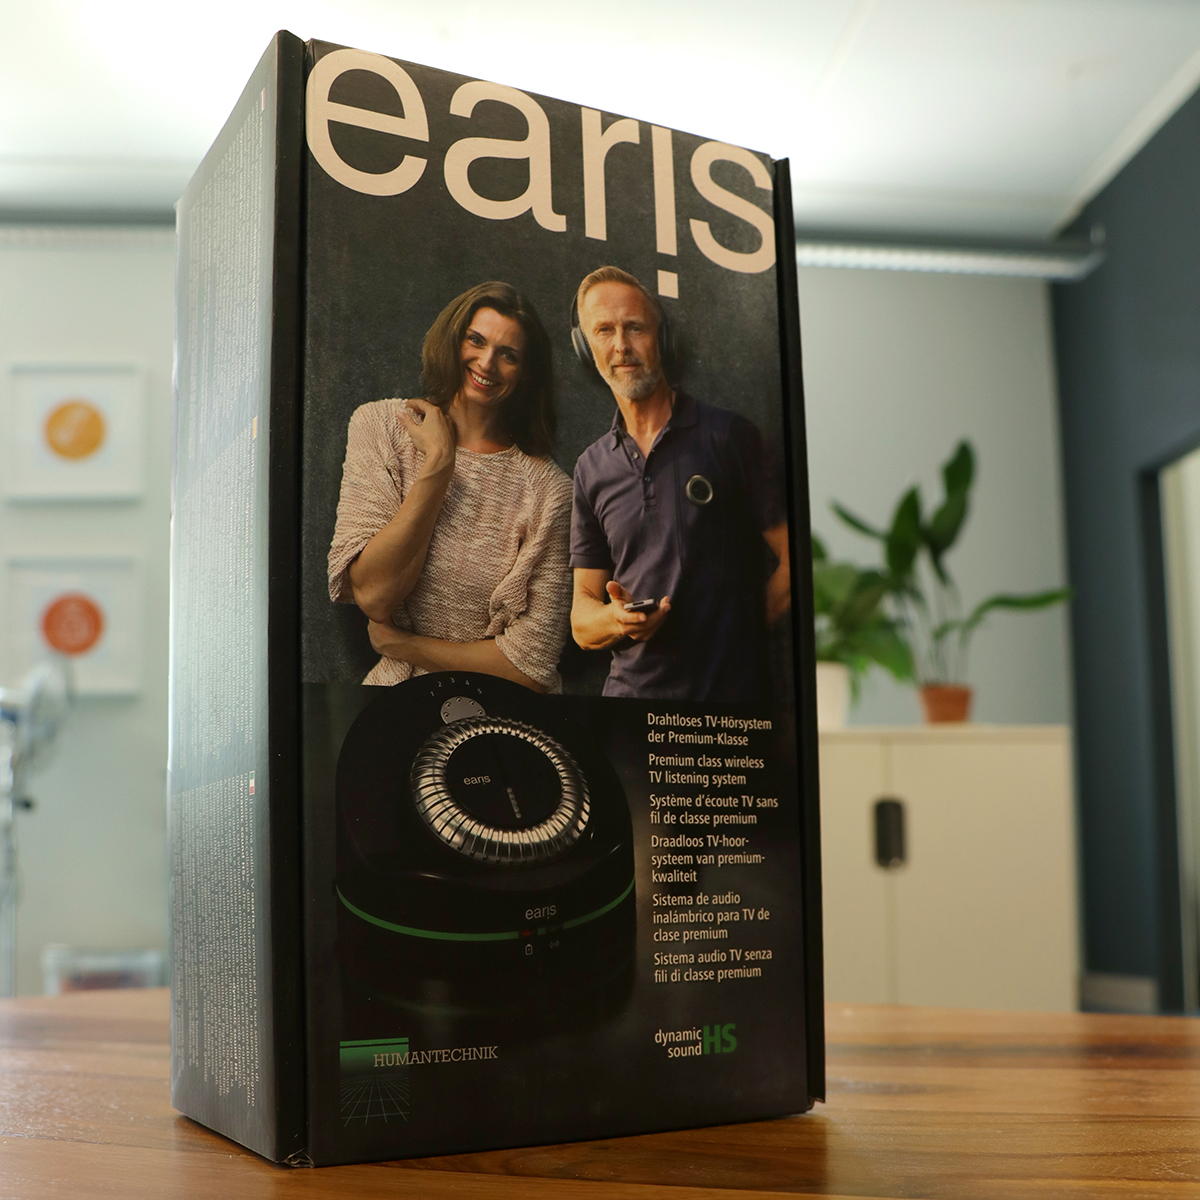 EARIS Premium Digital Pocket Receiver System